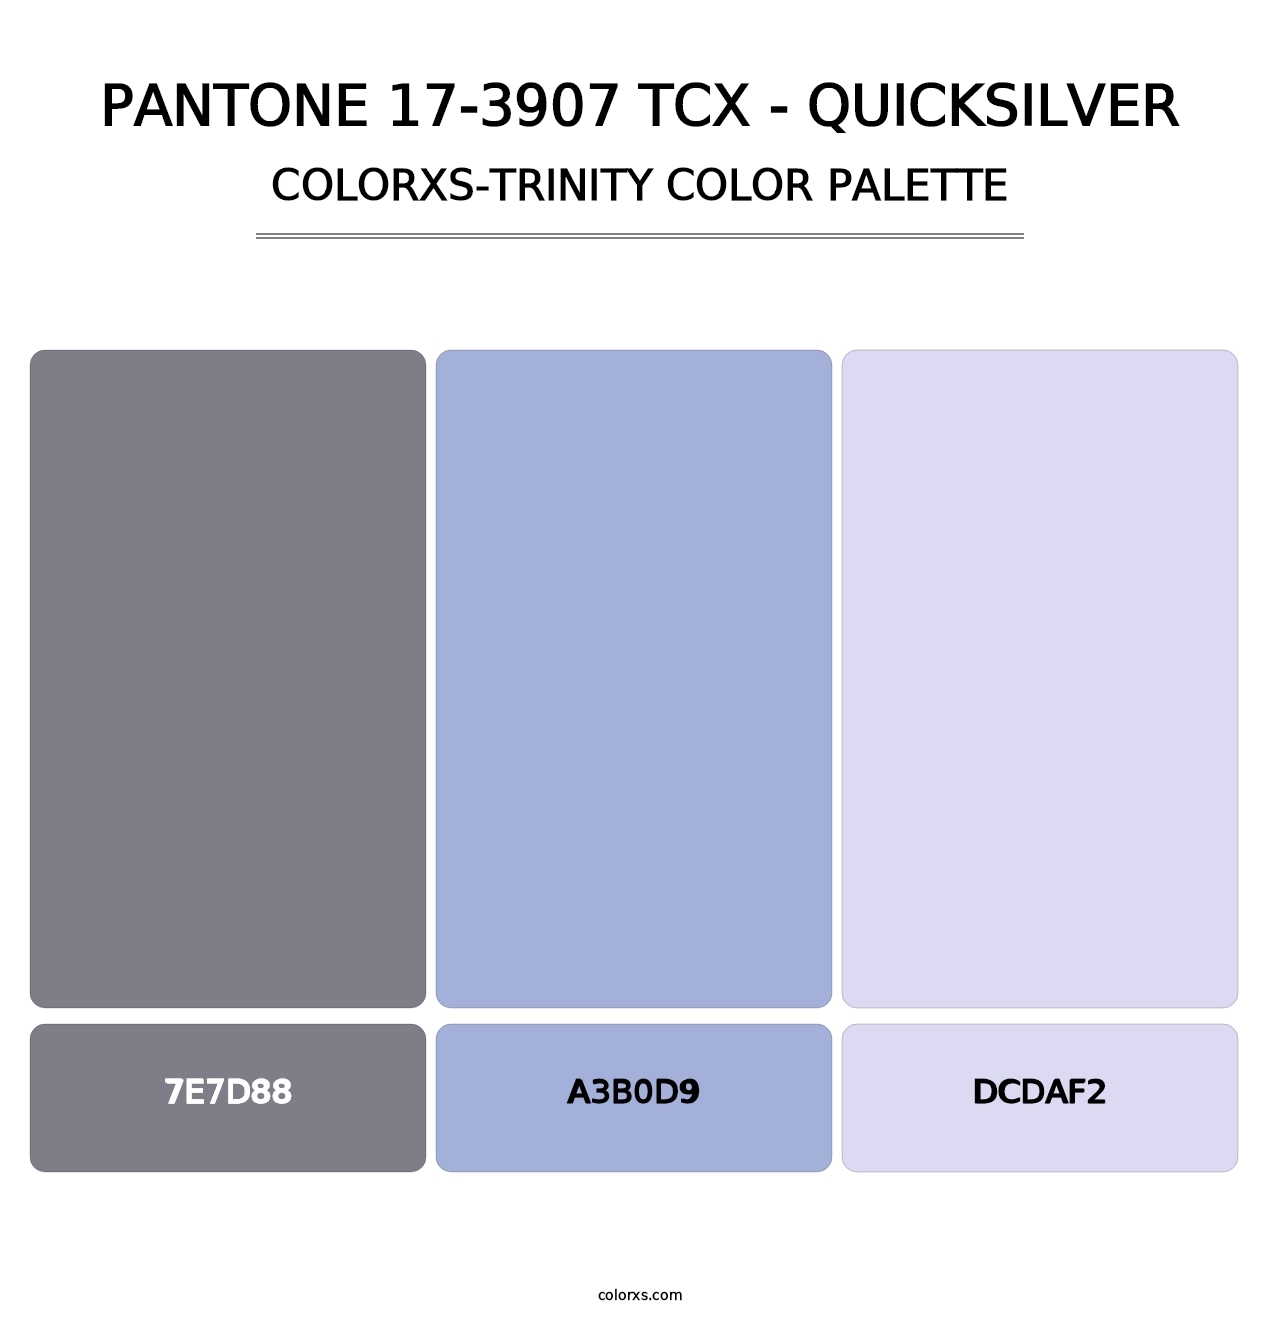 PANTONE 17-3907 TCX - Quicksilver - Colorxs Trinity Palette